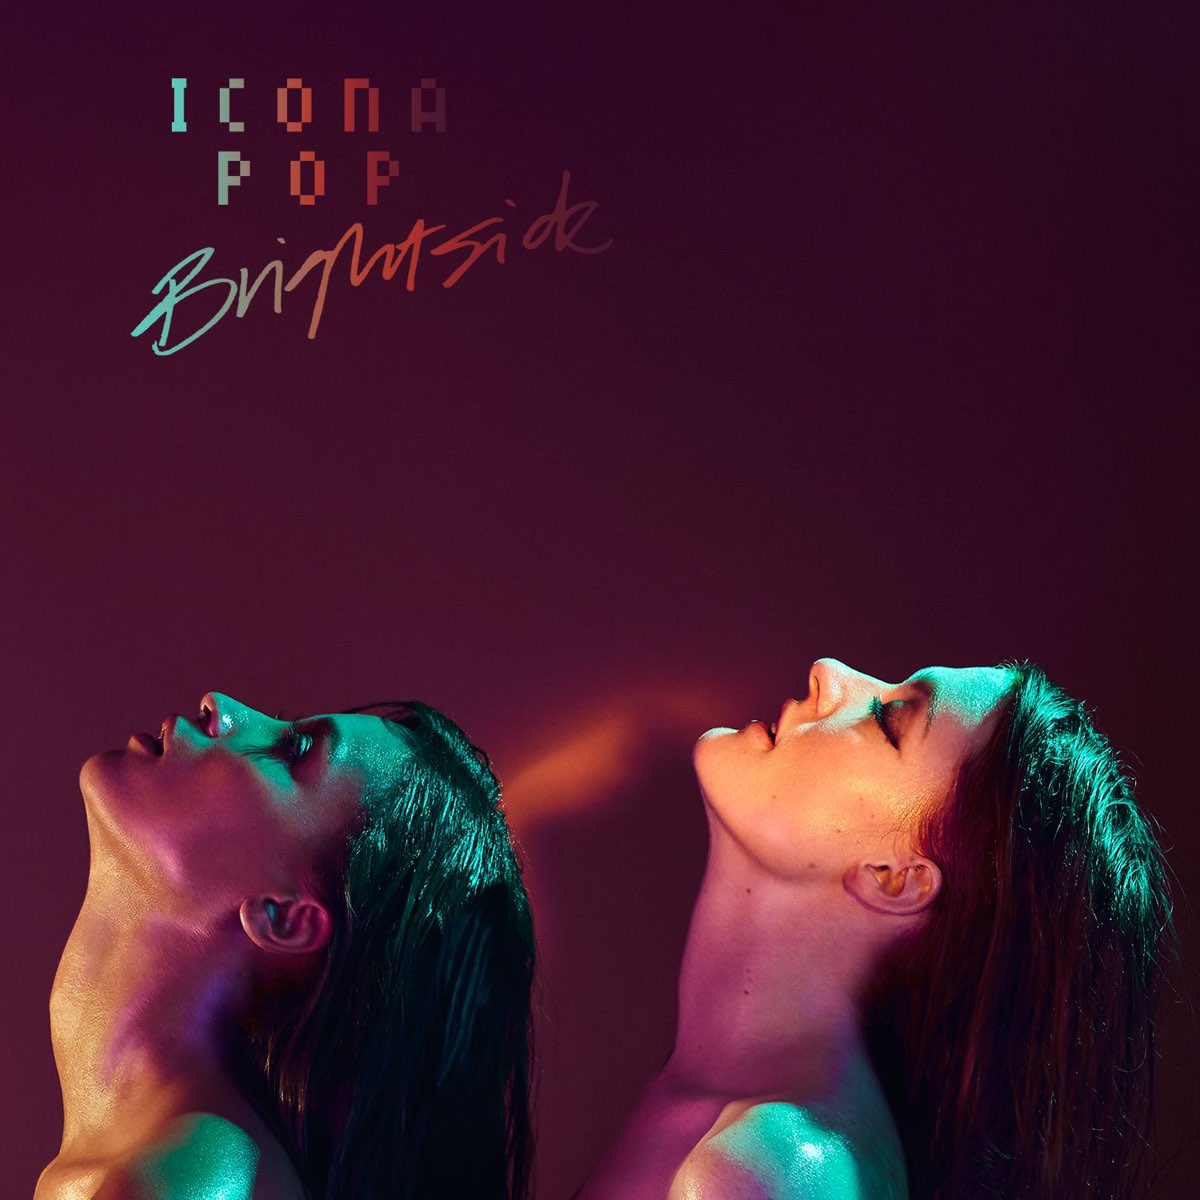 Brightside - Single by Icona Pop on Apple Music